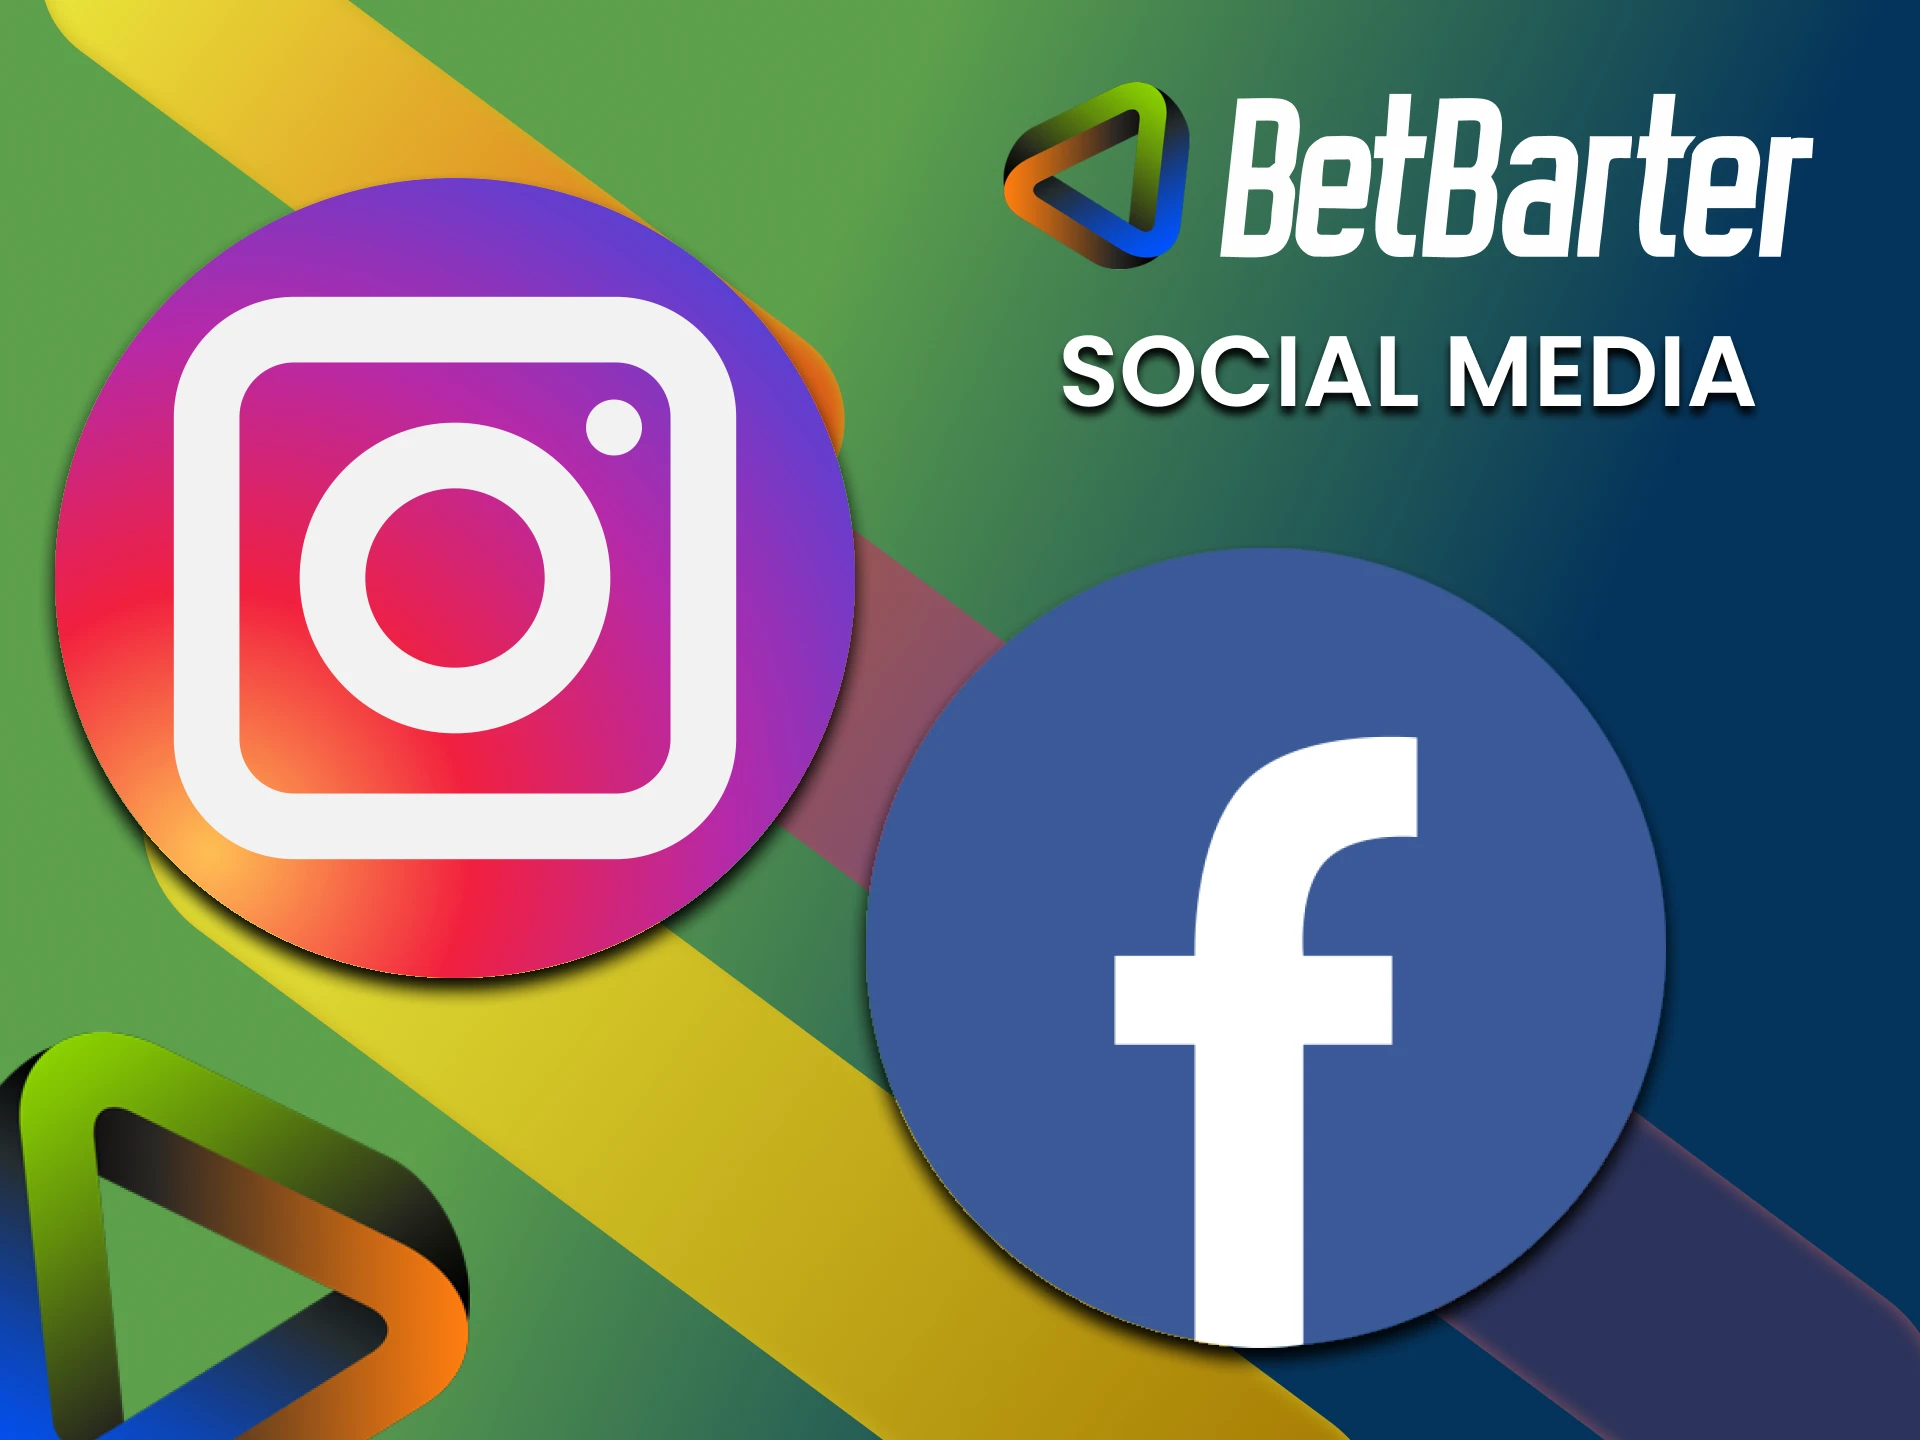 You can contact the BetBarter support team via social media.